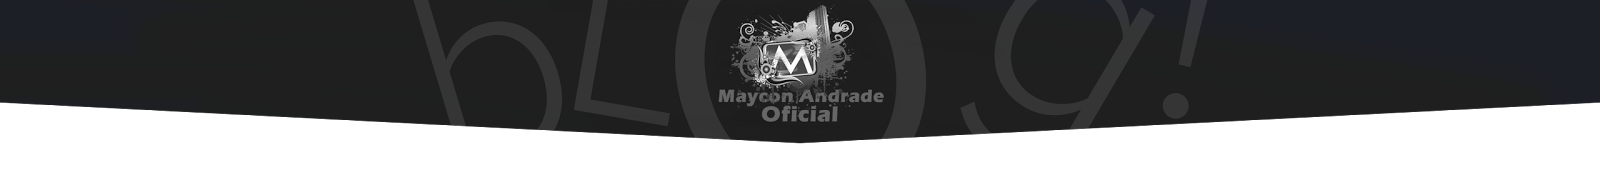 Maycon Andrade